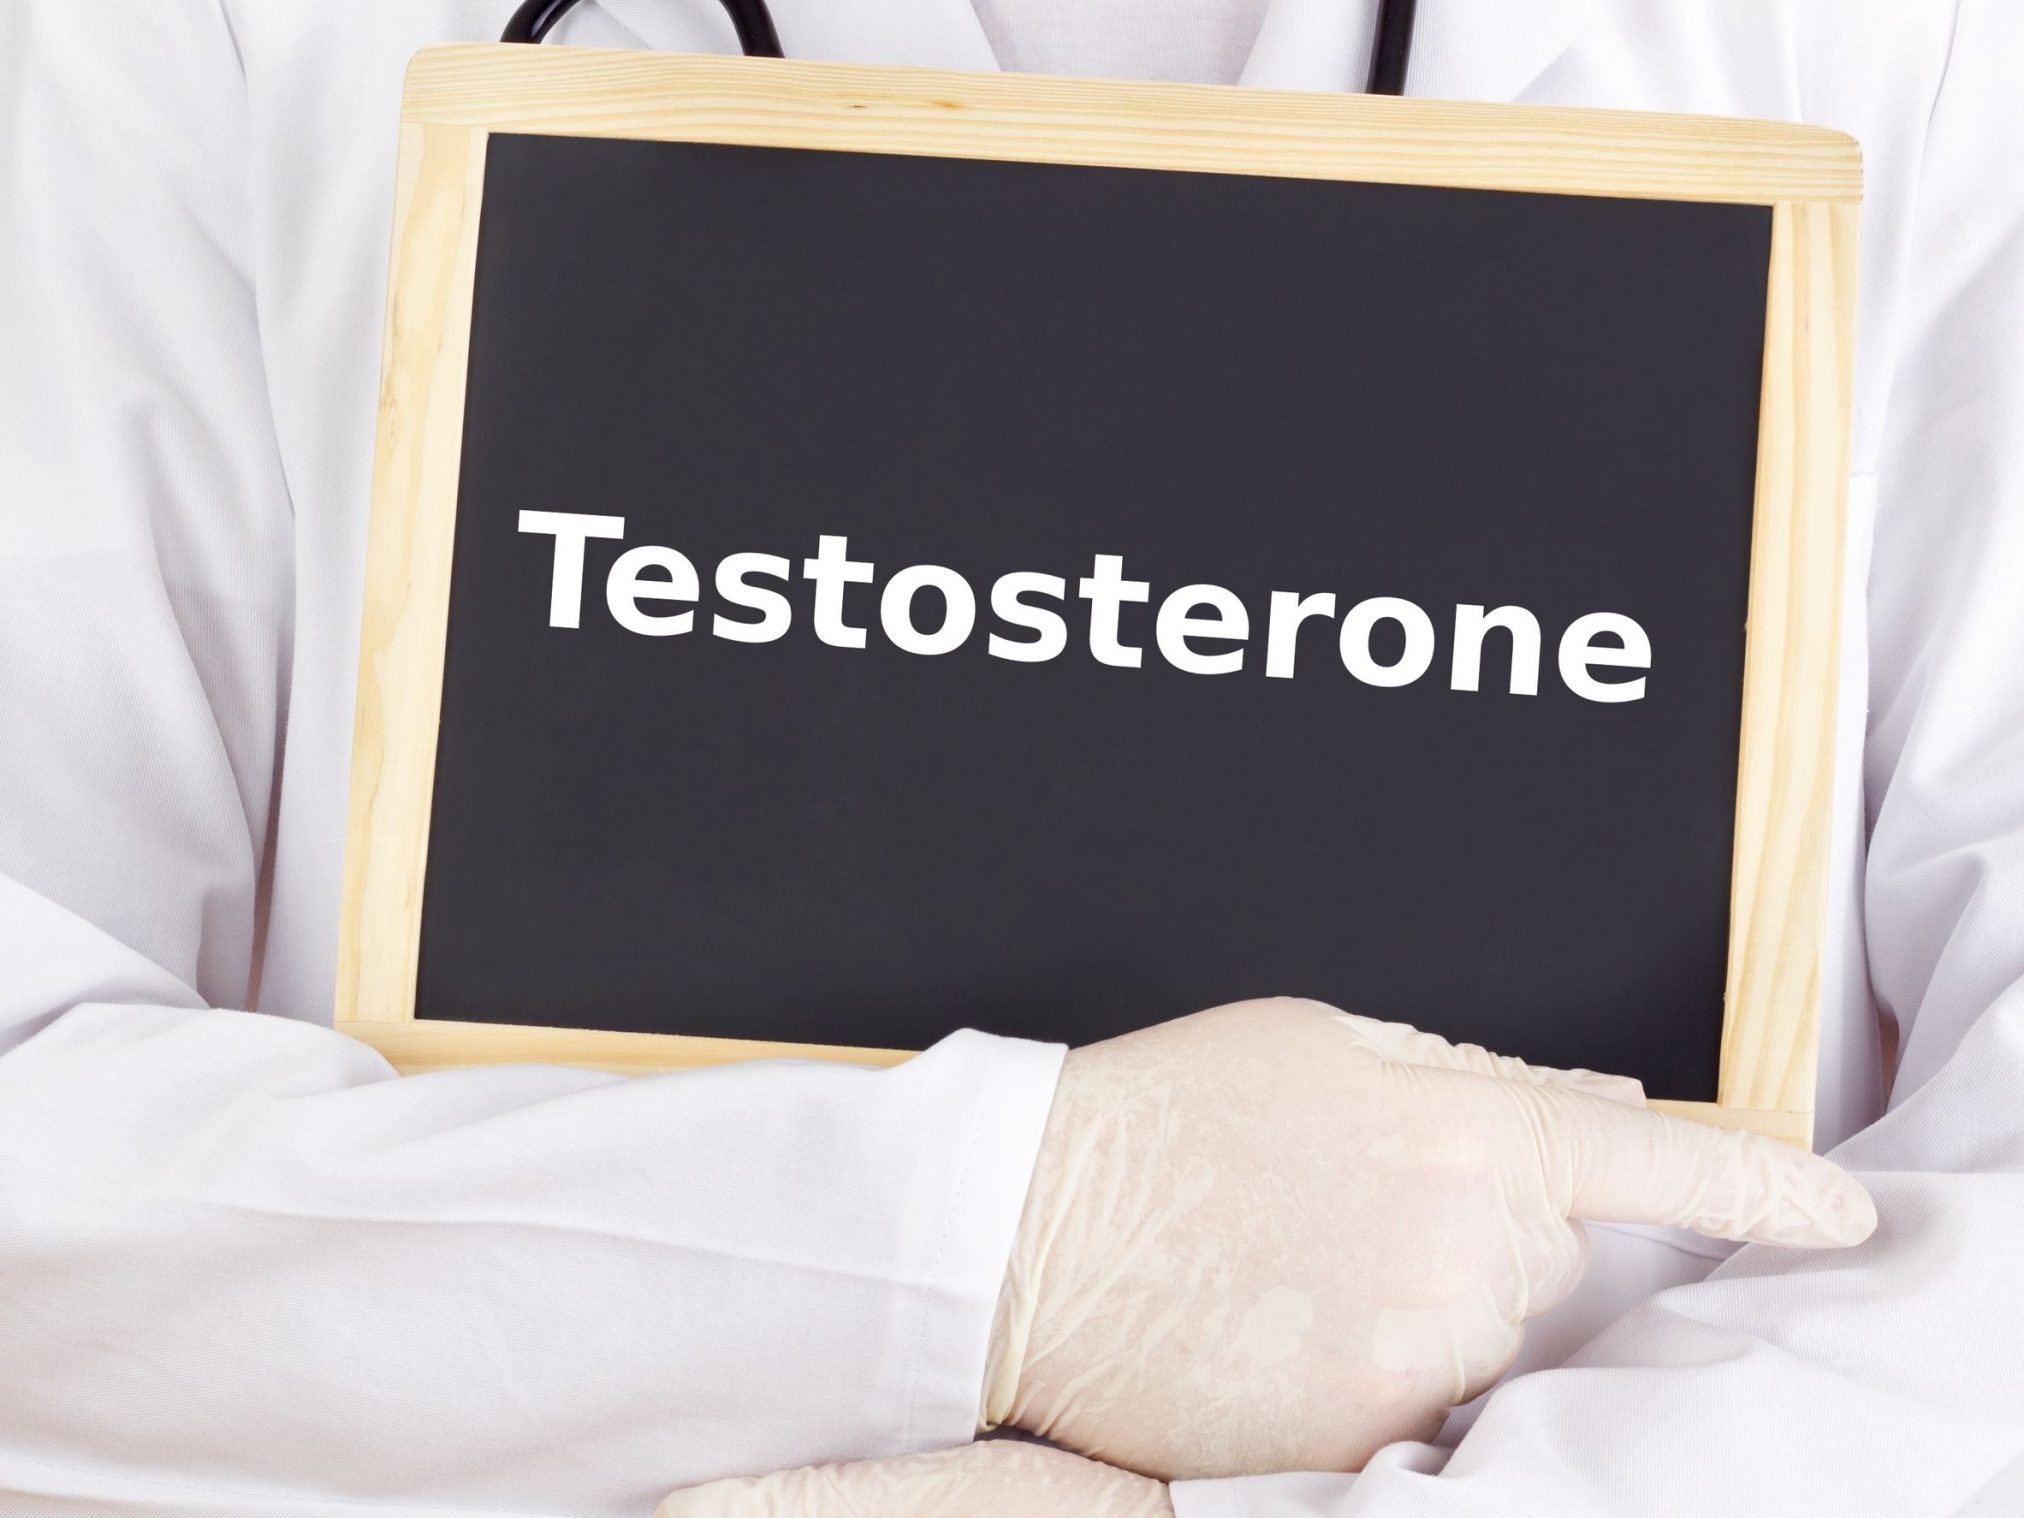 blackboard says "testosterone"